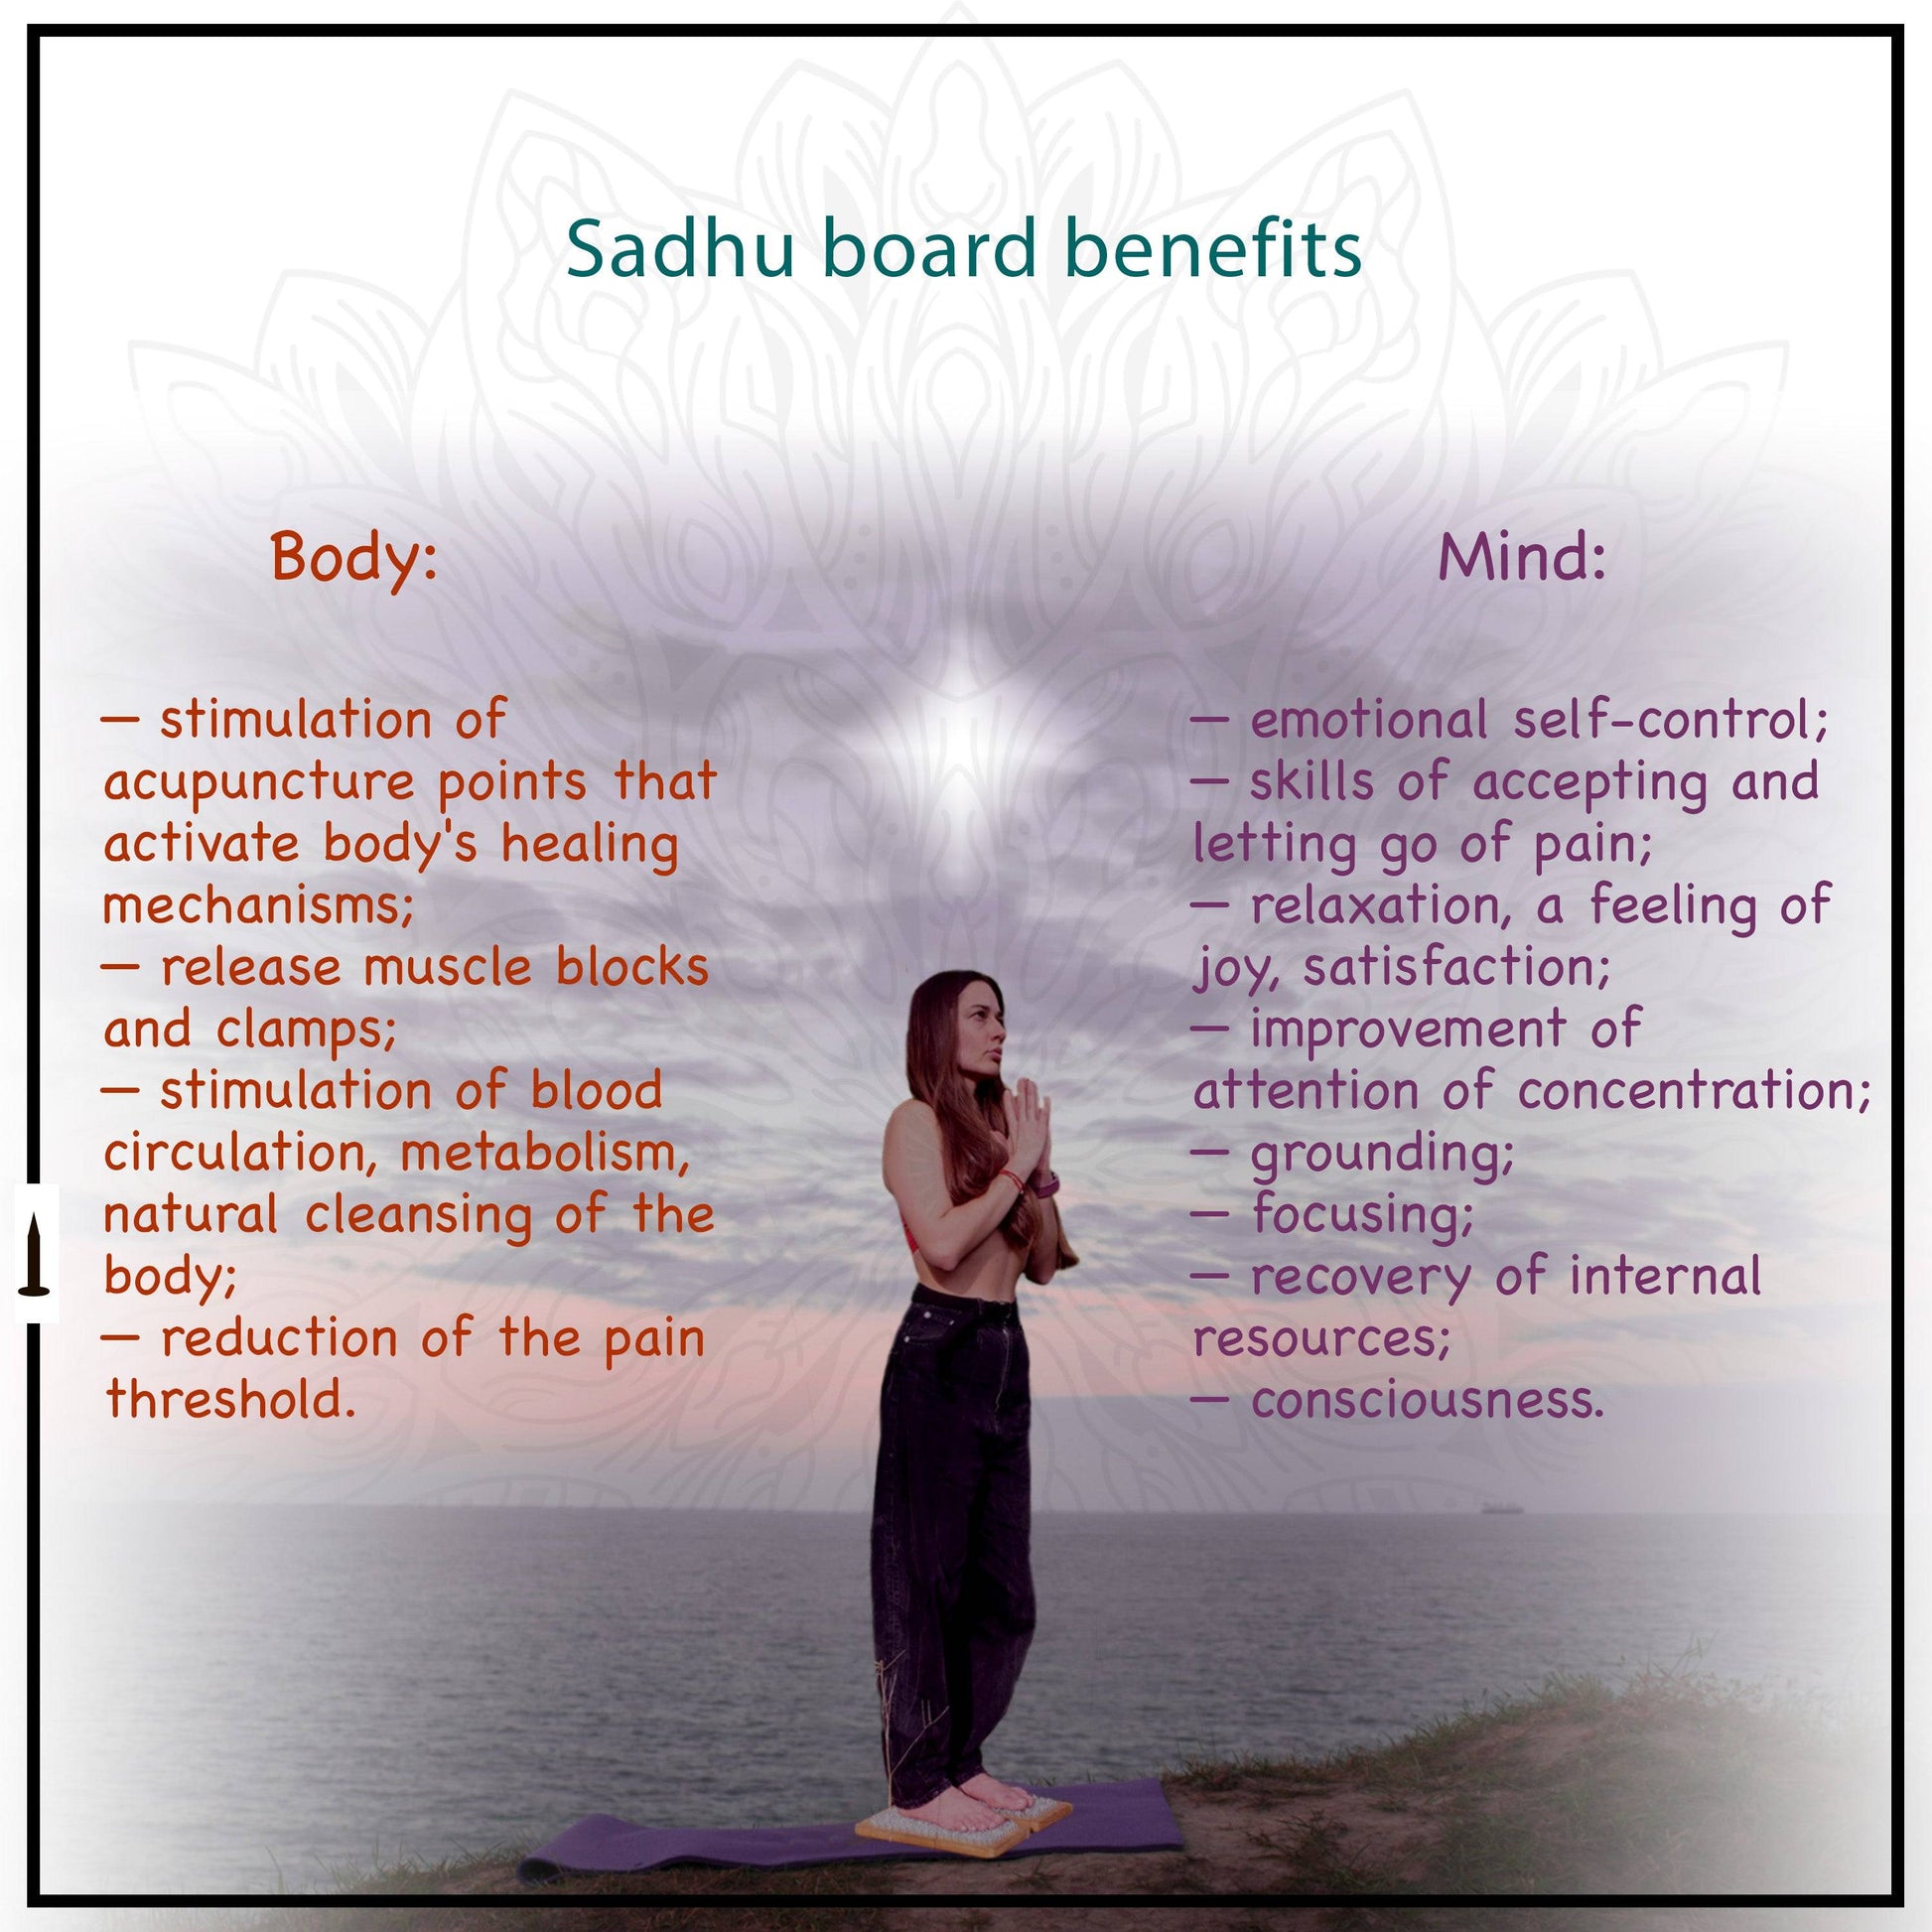 benefits of sadhu board for mind and body girl standing on seashore on sadhu board